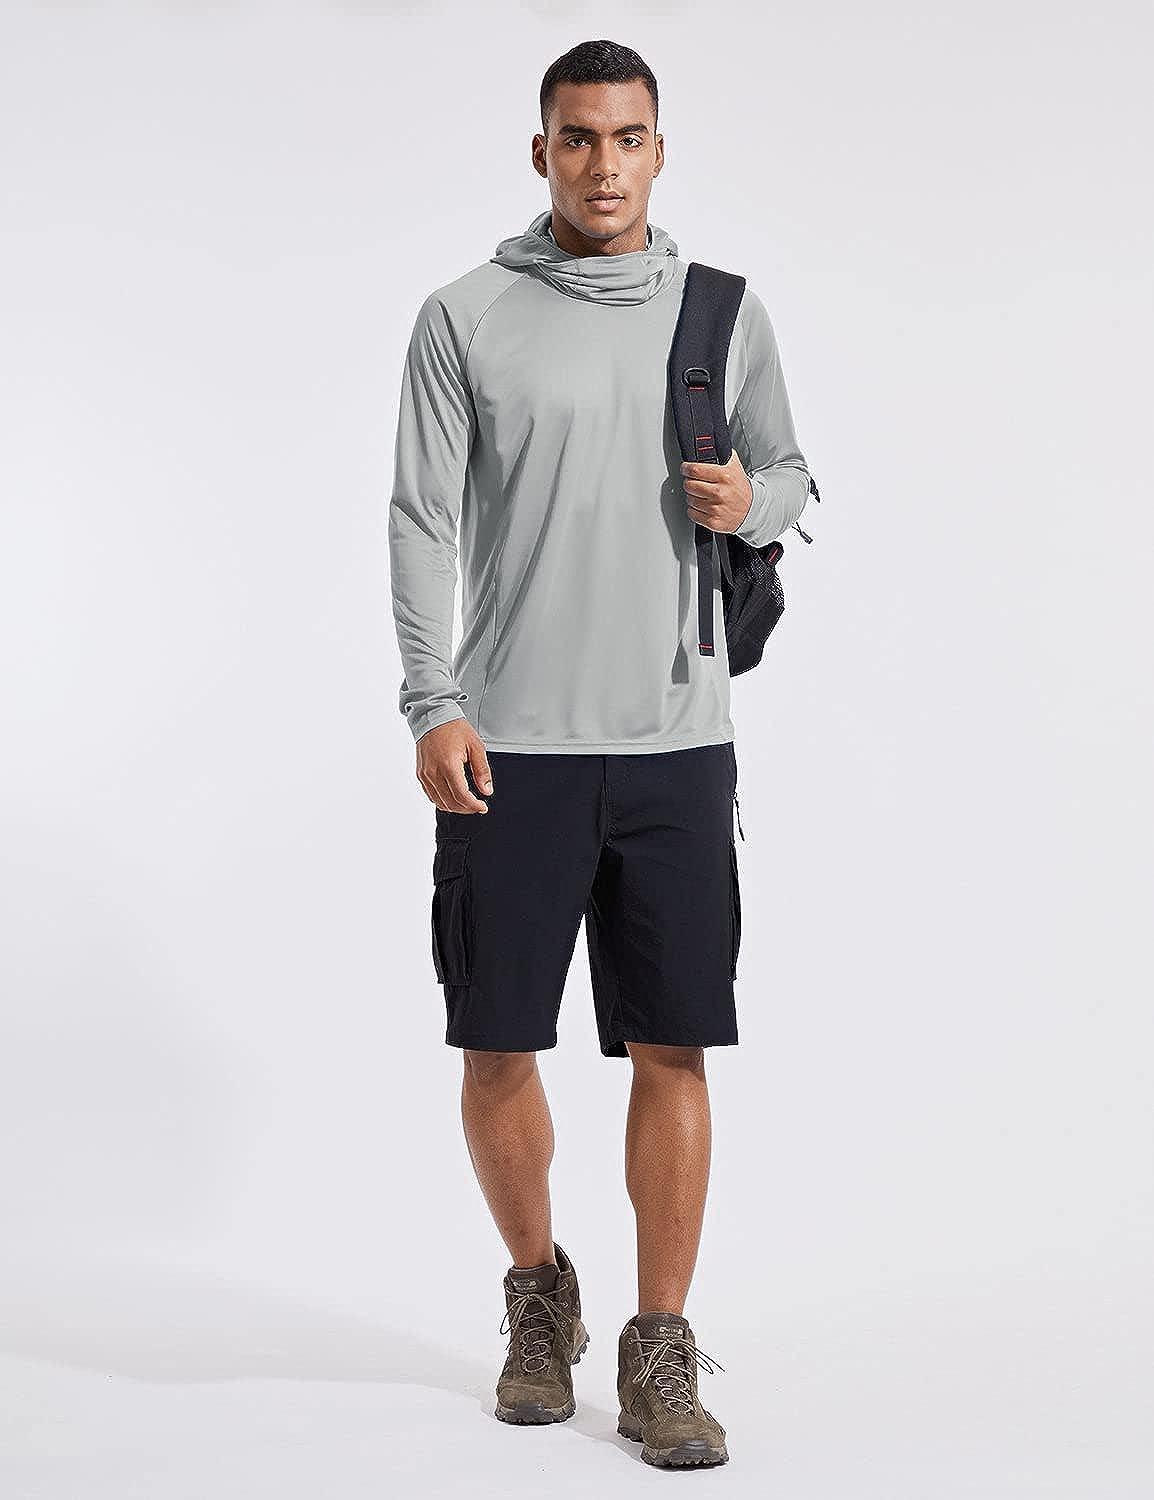 Men's Performance UPF 50+ UV/Sun Protection Hoodie T-Shirt Long Sleeve with Pockets SPF Shirt Running Hiking Shirt